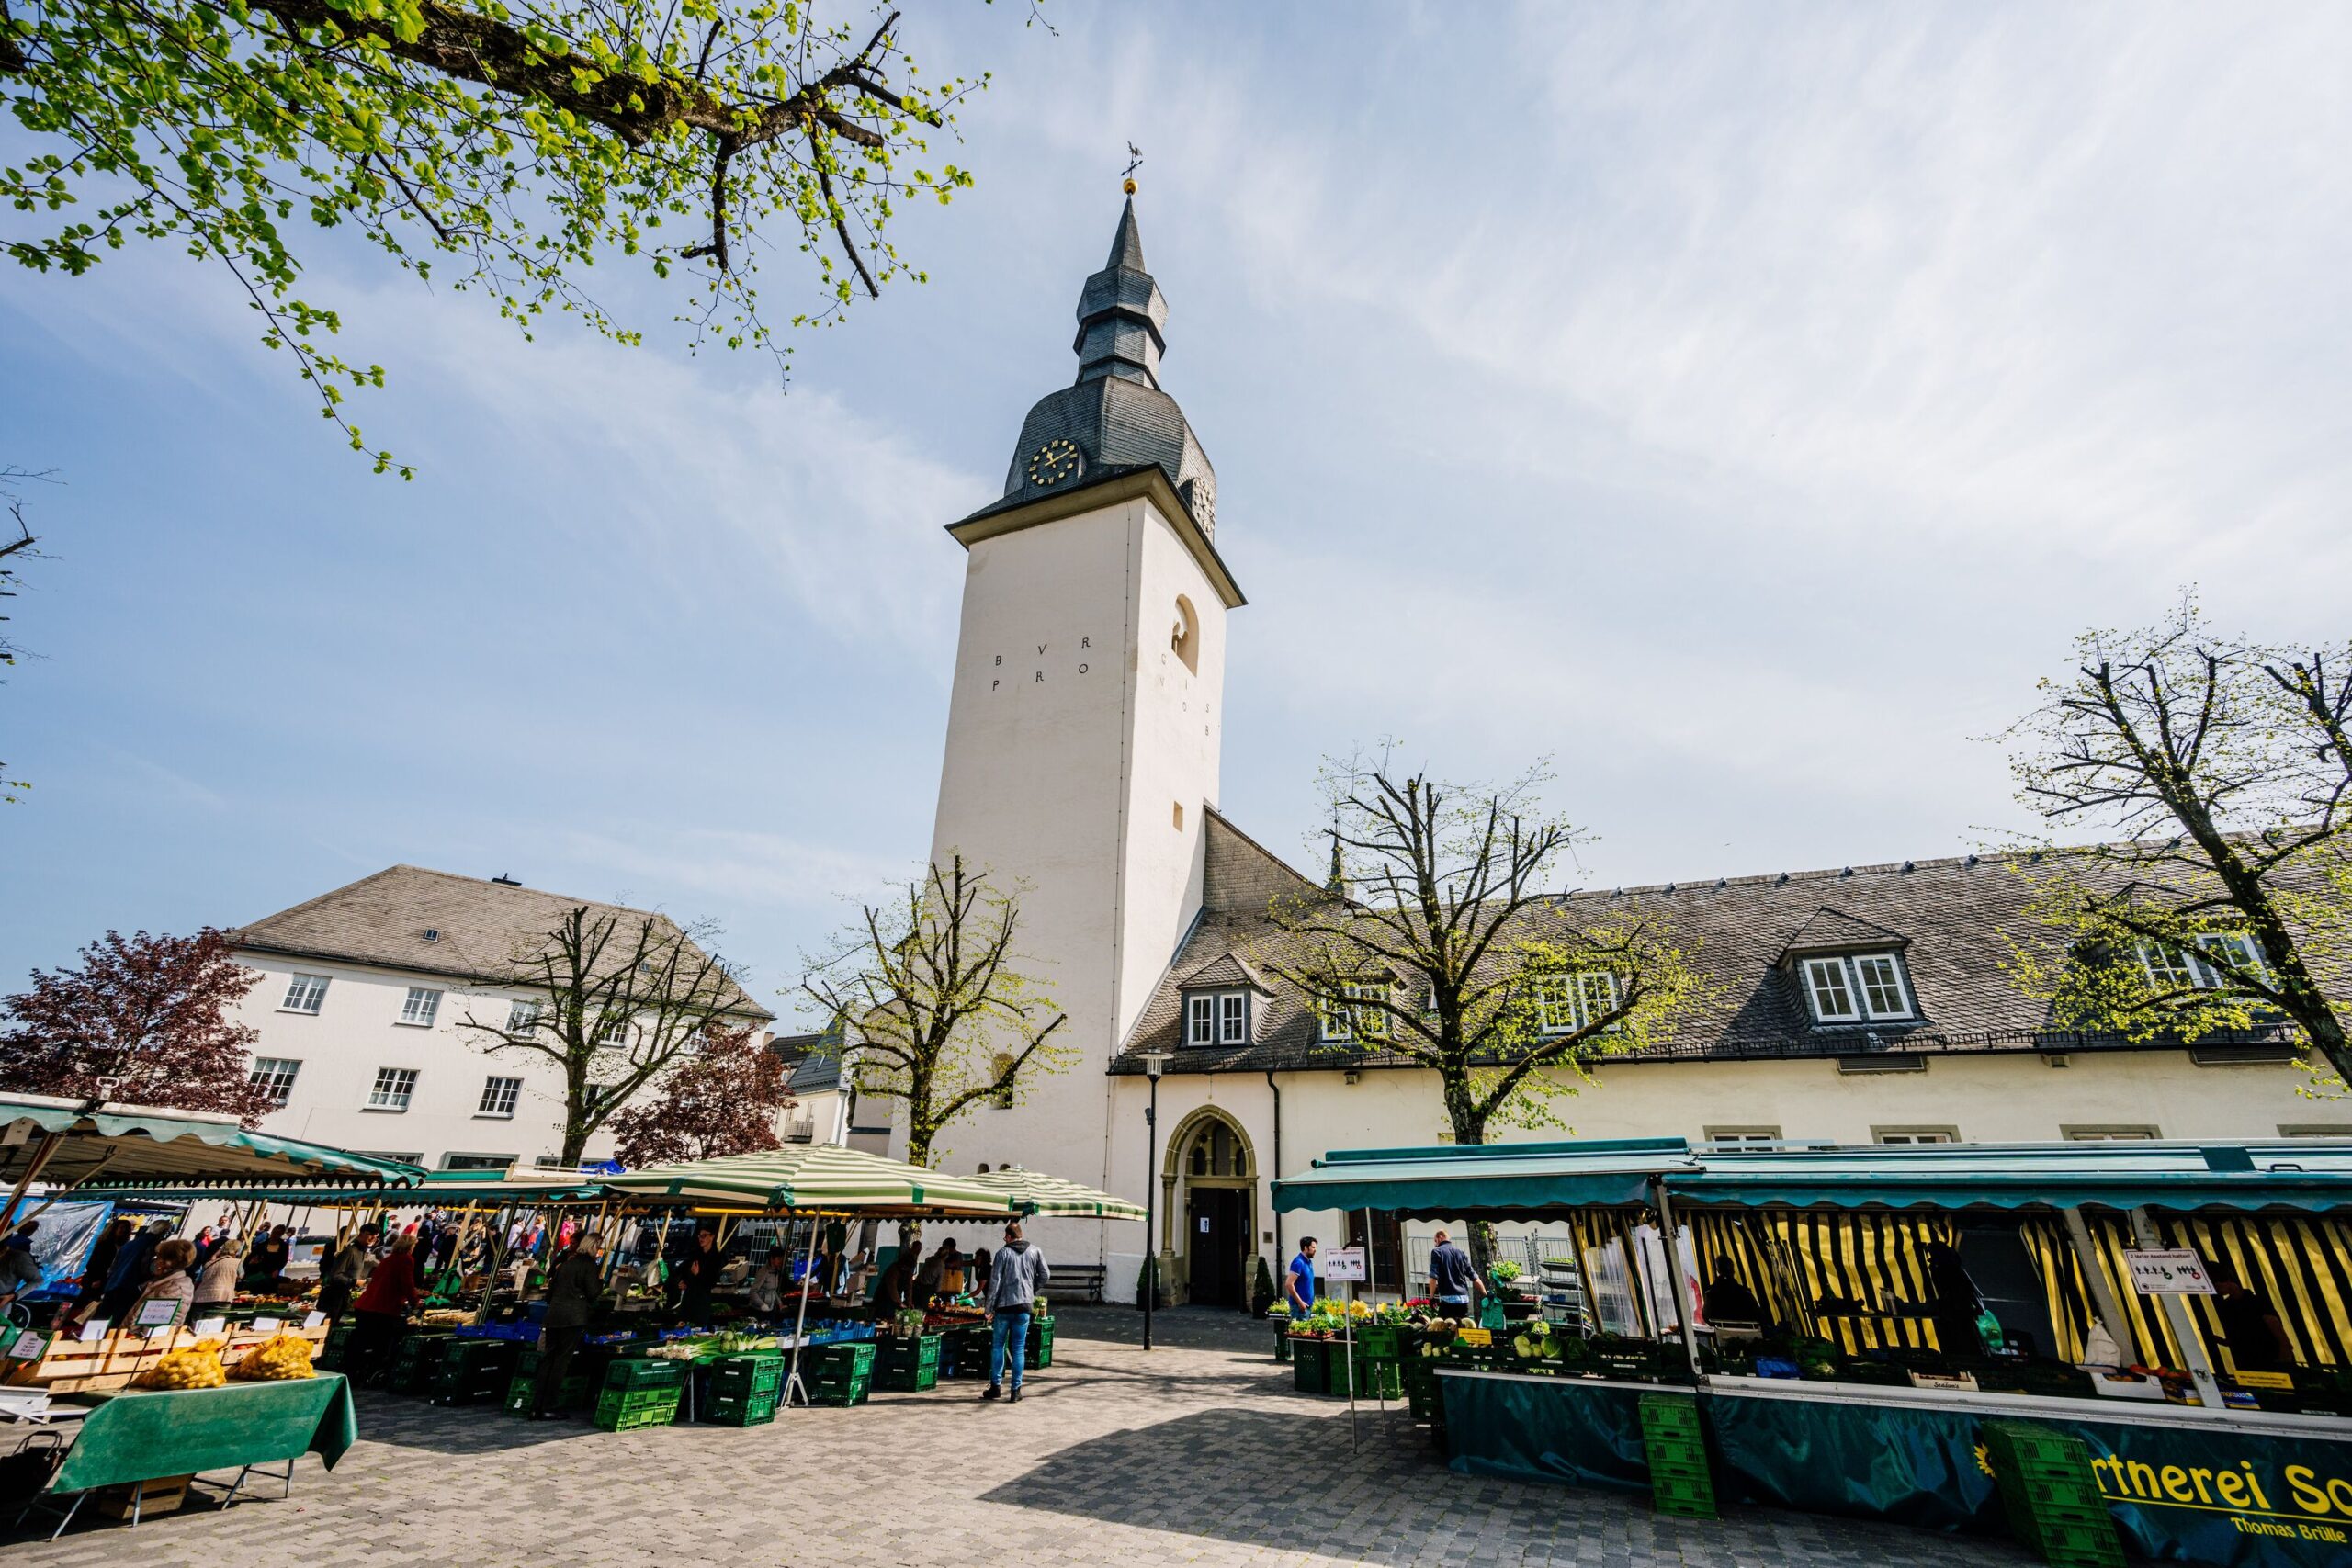 Pfarrkirche St. Walburga am Markttag direkt neben dem Café Pan